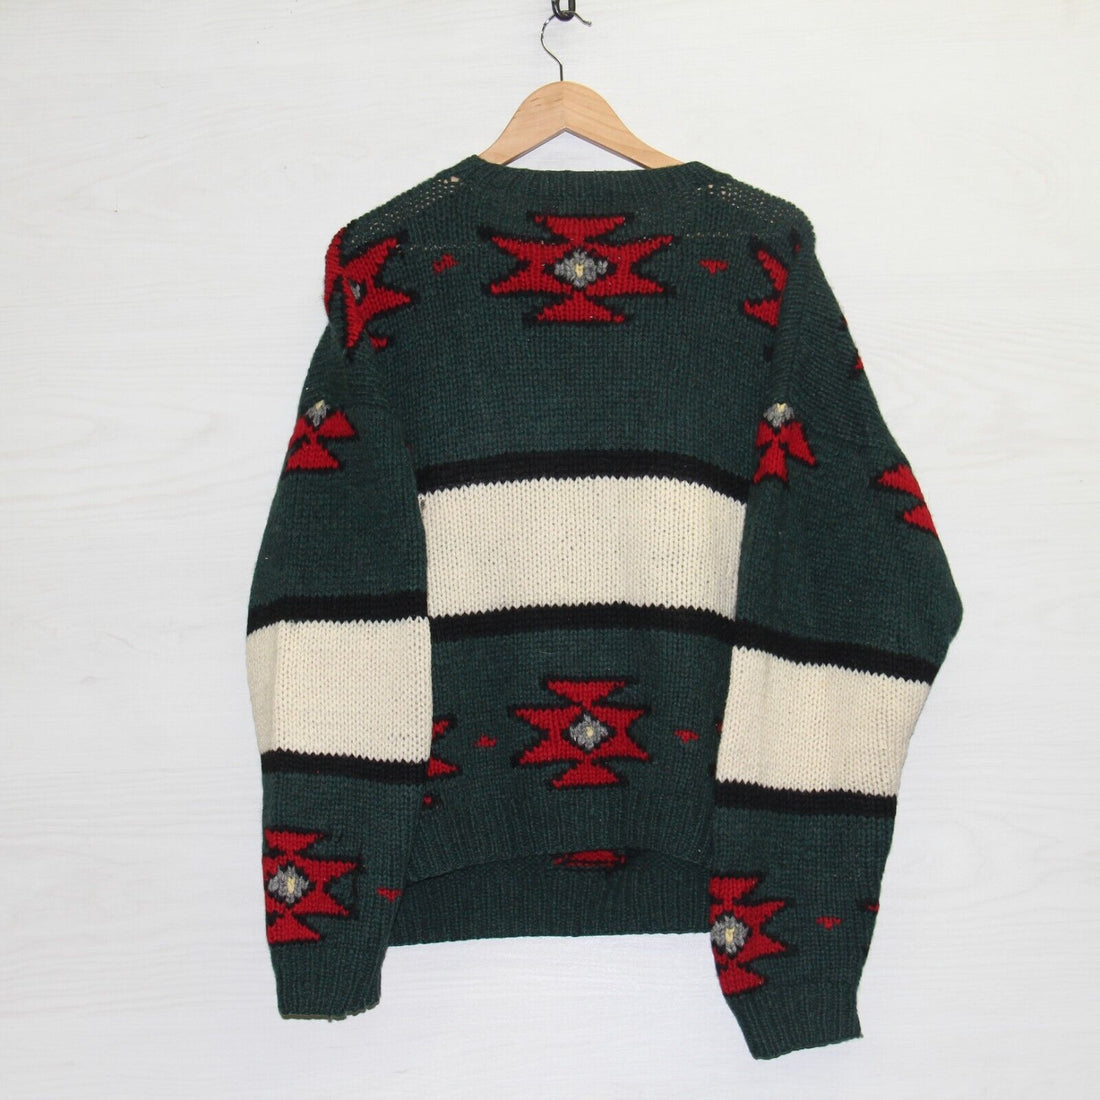 Vintage Woolrich Wool Knit Crewneck Sweater Size XL Canoe Aztec Green